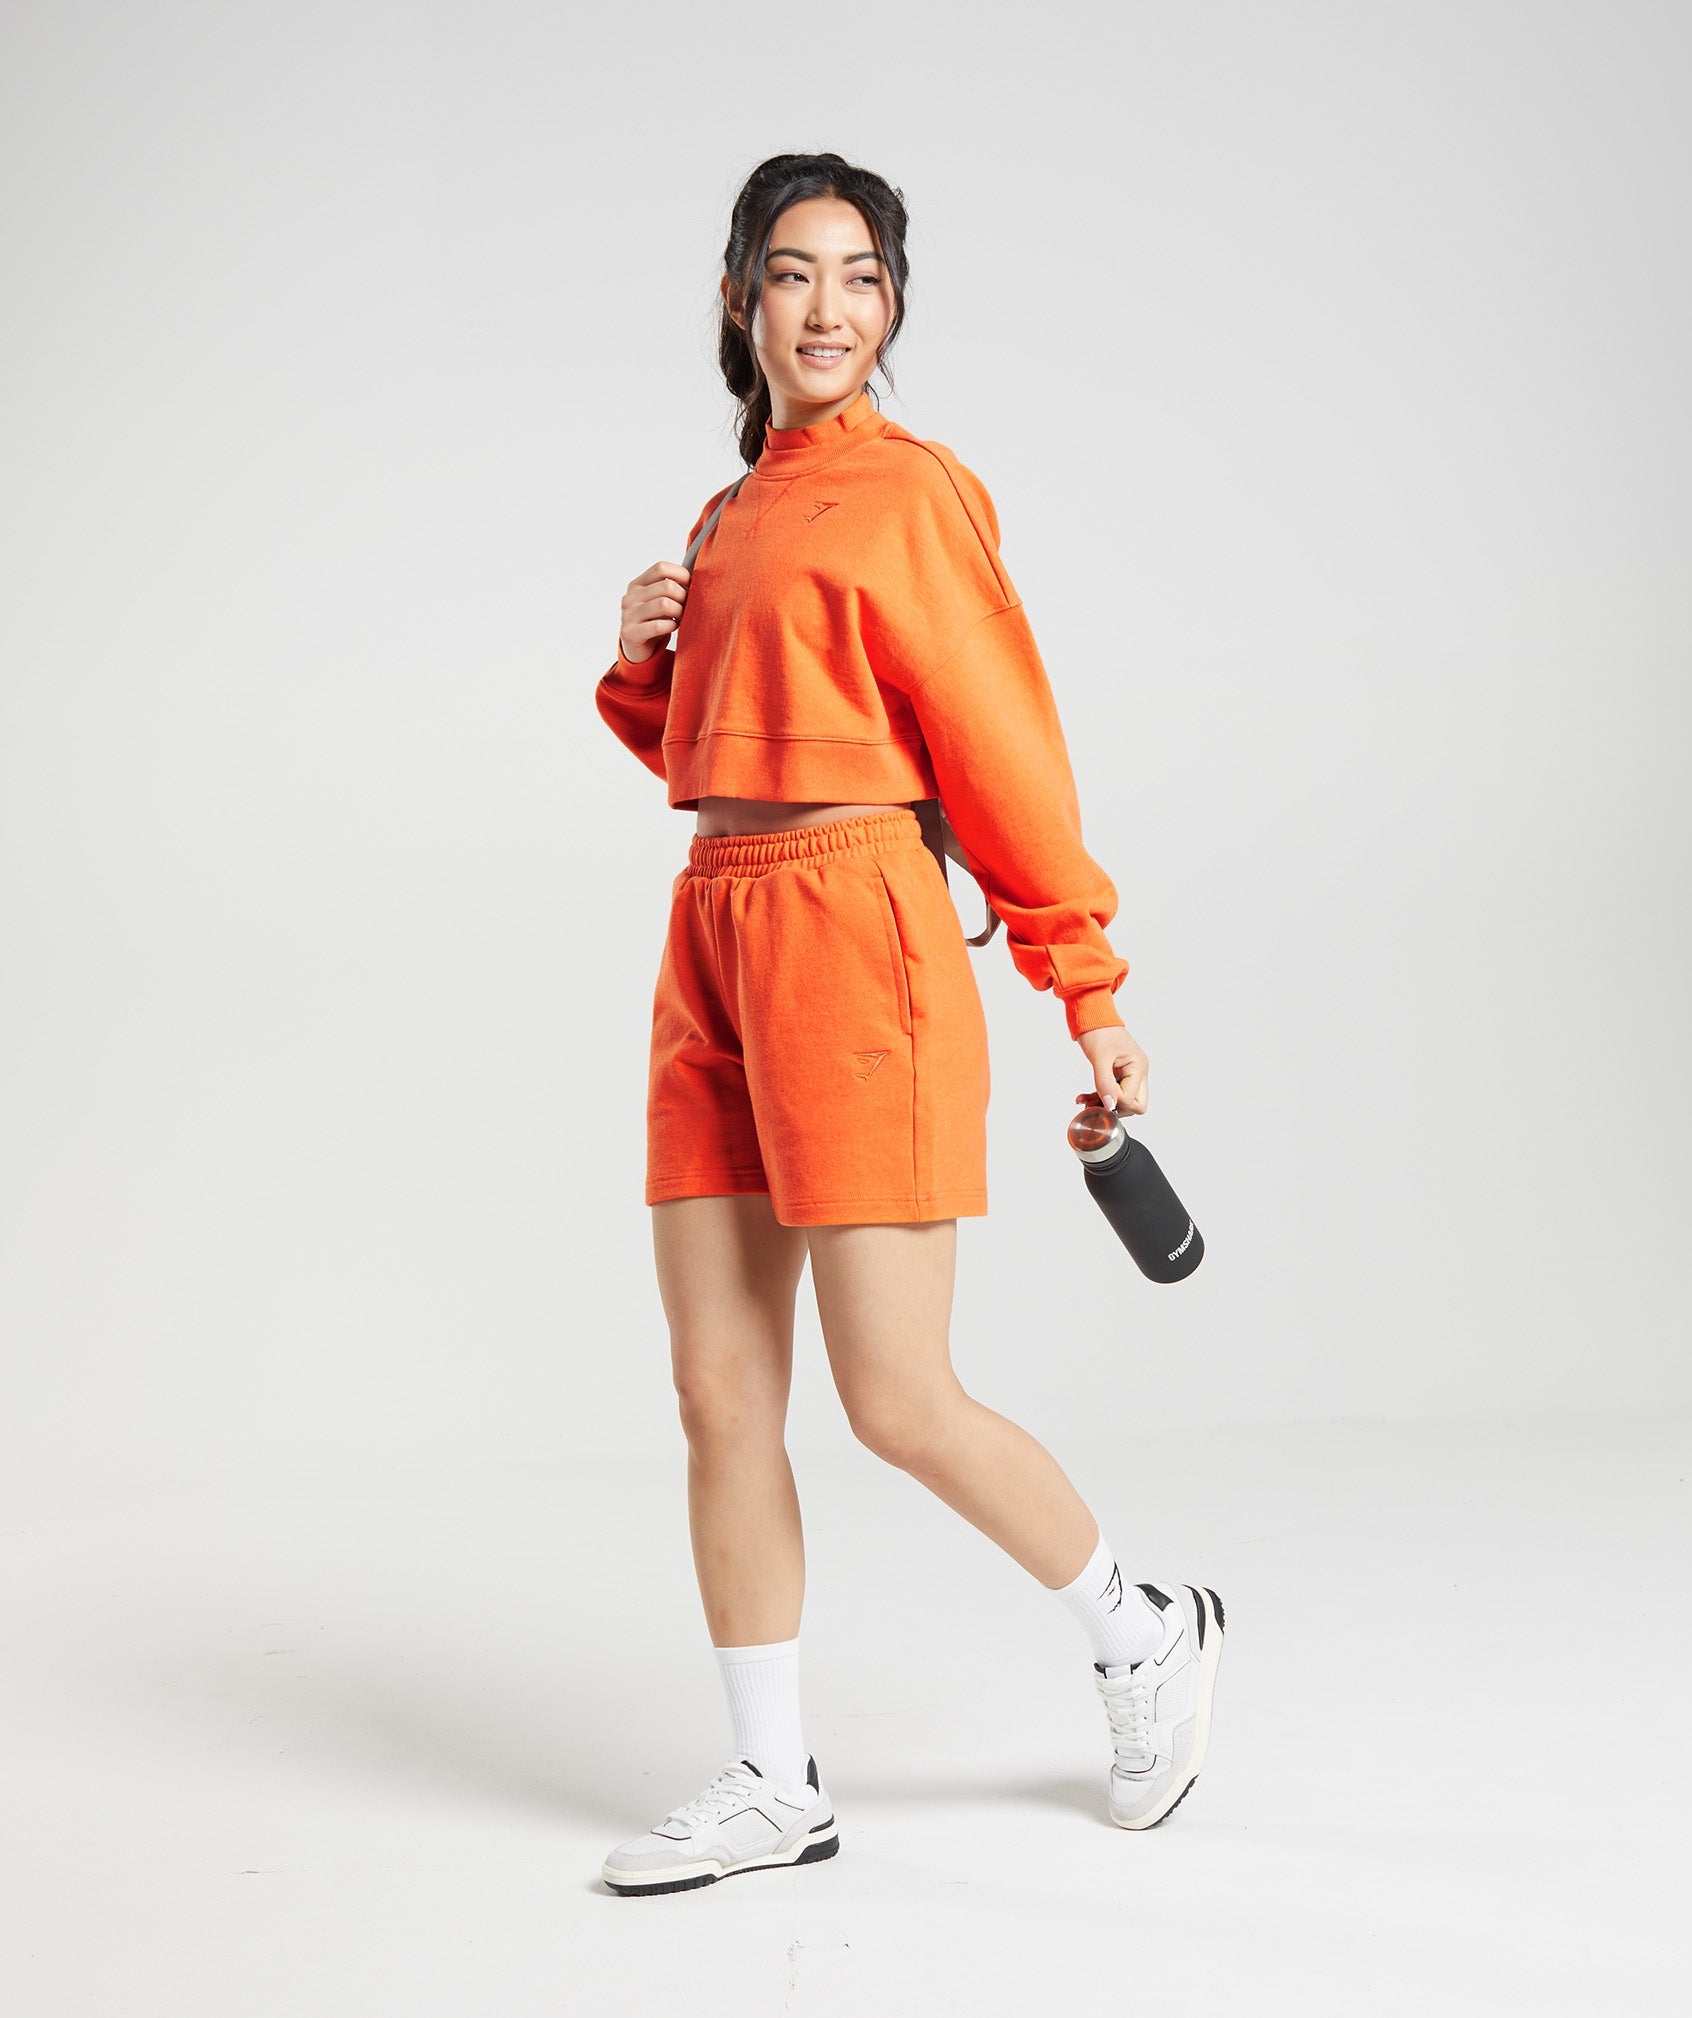 Gymshark Rest Day Sweats Cropped Pullover Sweatshirts Damen Orange | 8706214-BY